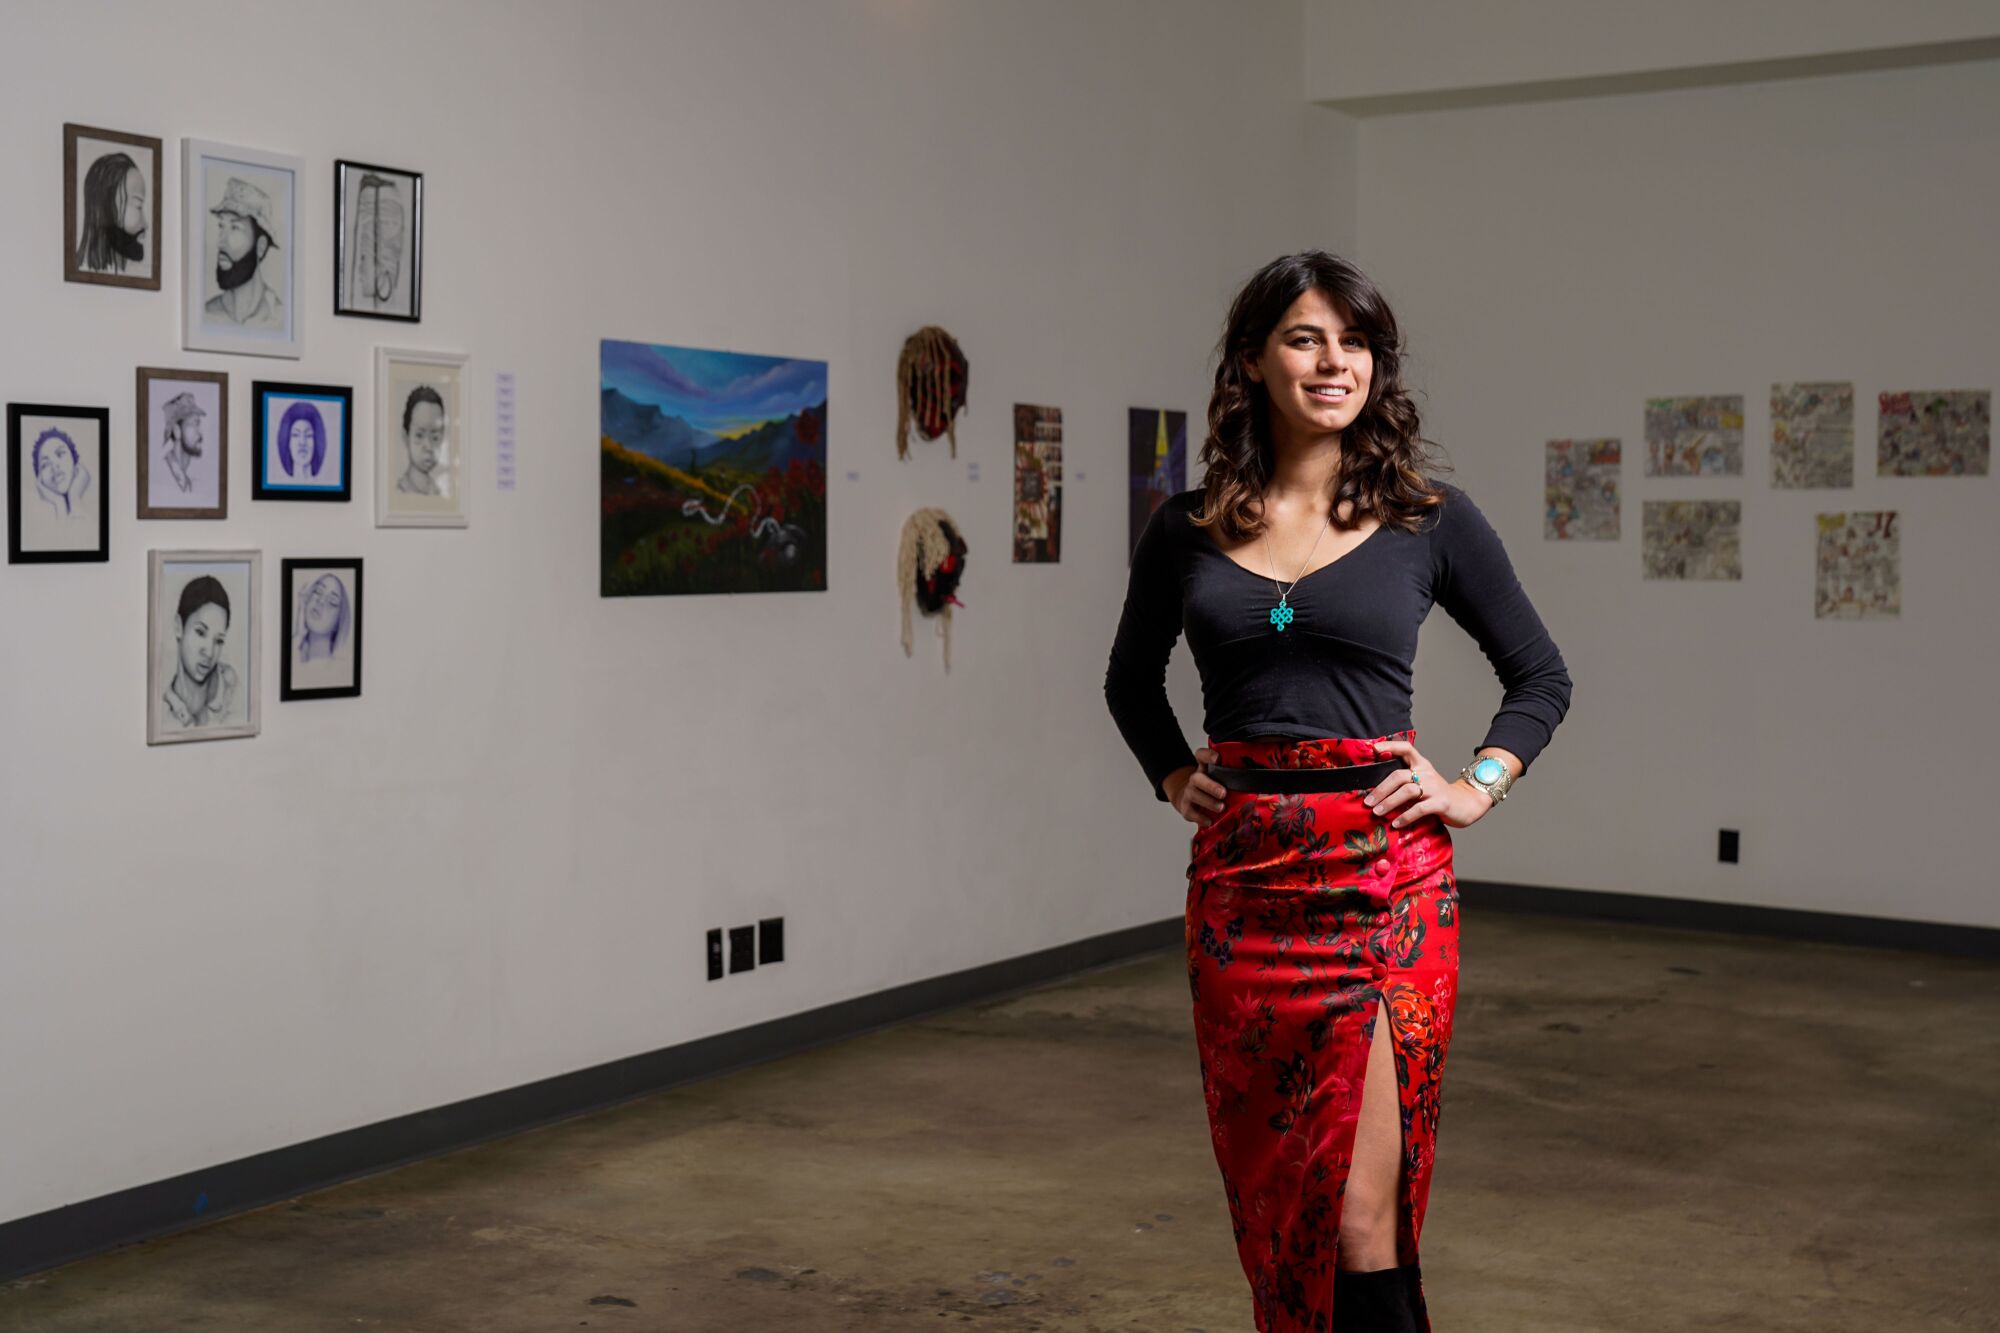 Curator Meetra Johansen is the founder of Huma House, a contemporary art initiative. 